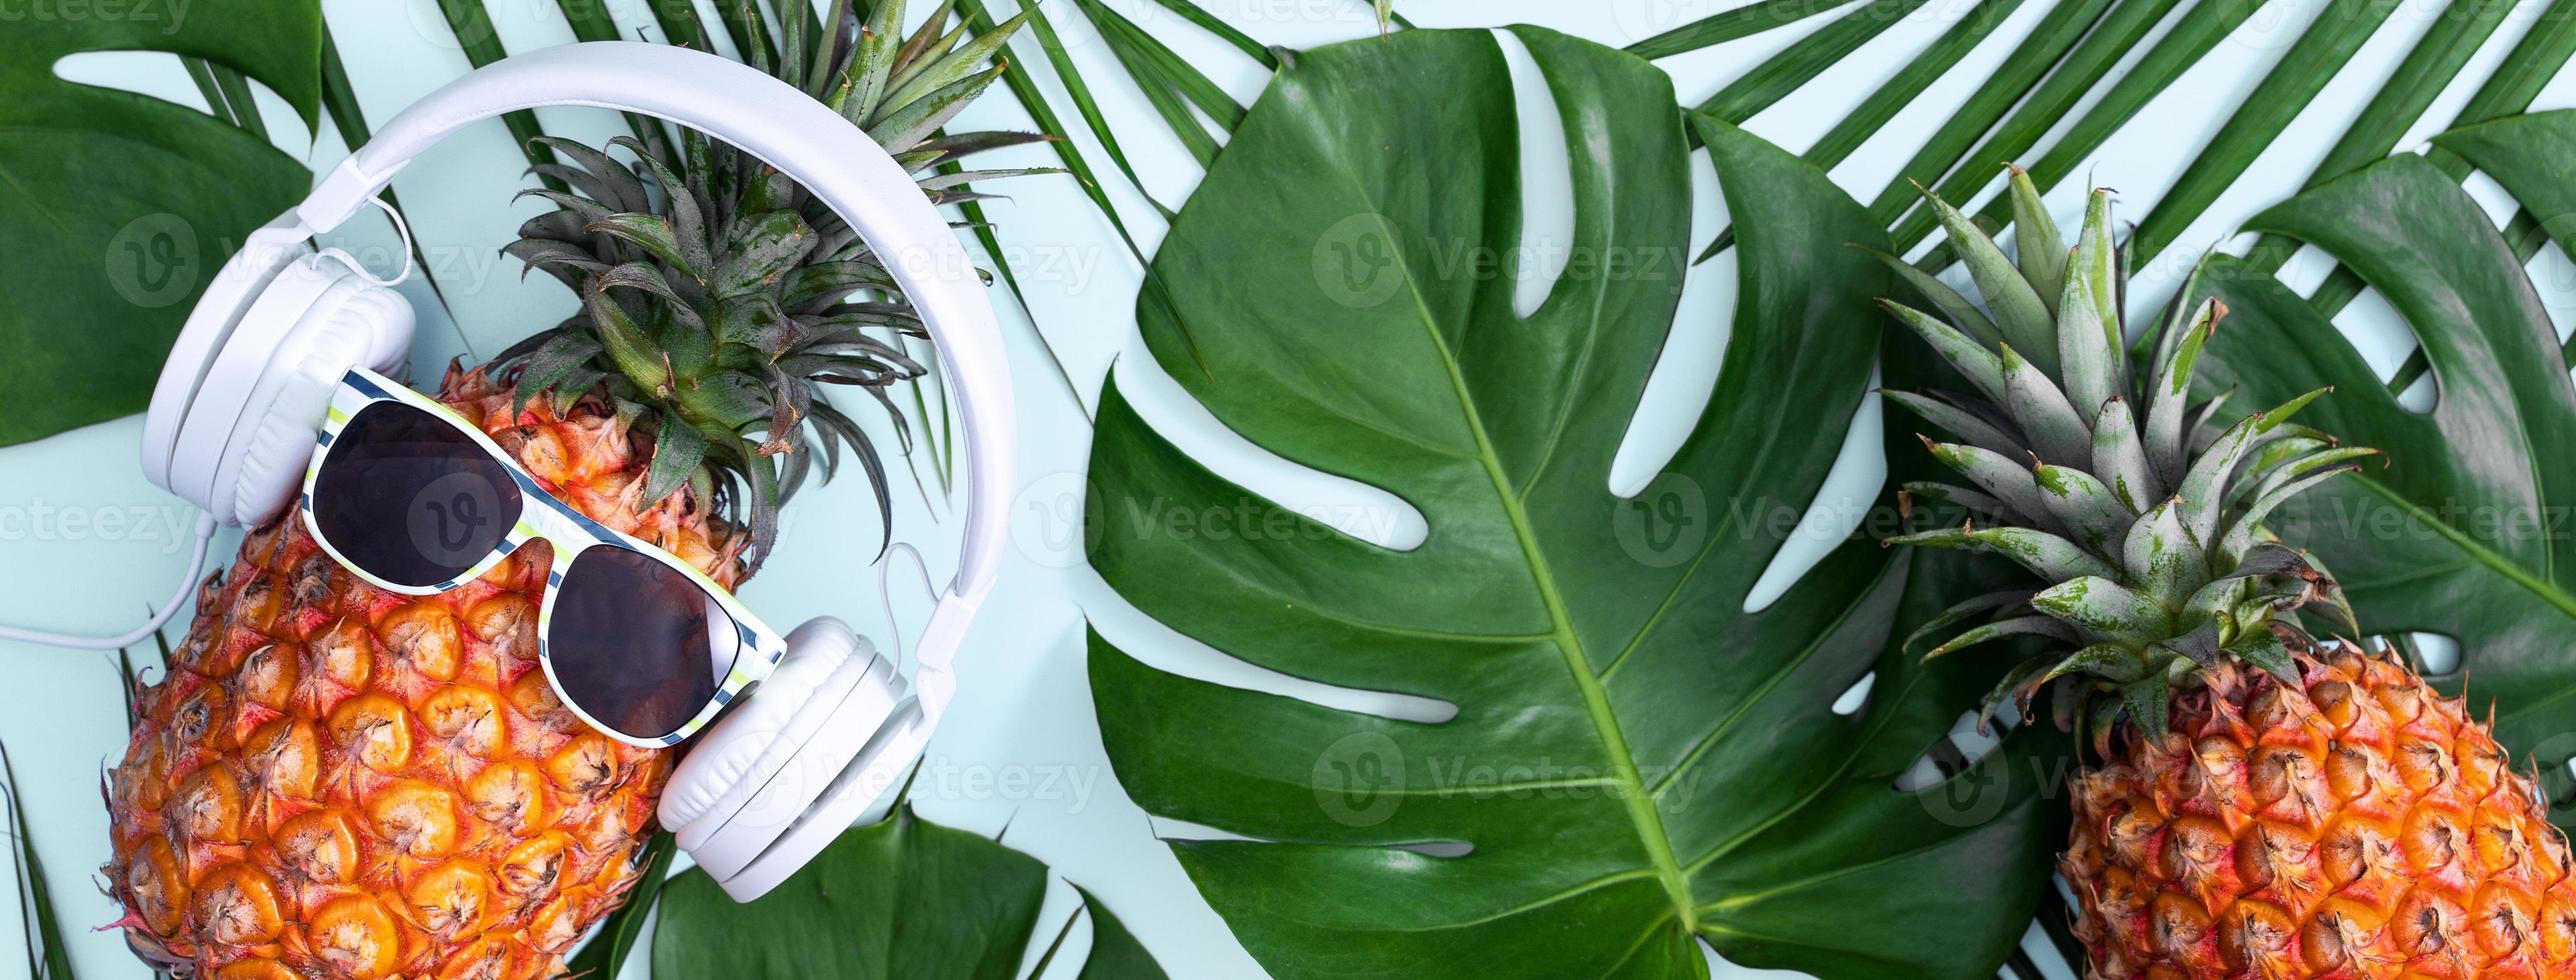 piña divertida con auriculares blancos, concepto de escuchar música, aislada en un fondo de color con hojas de palma tropical, vista superior, diseño plano. foto